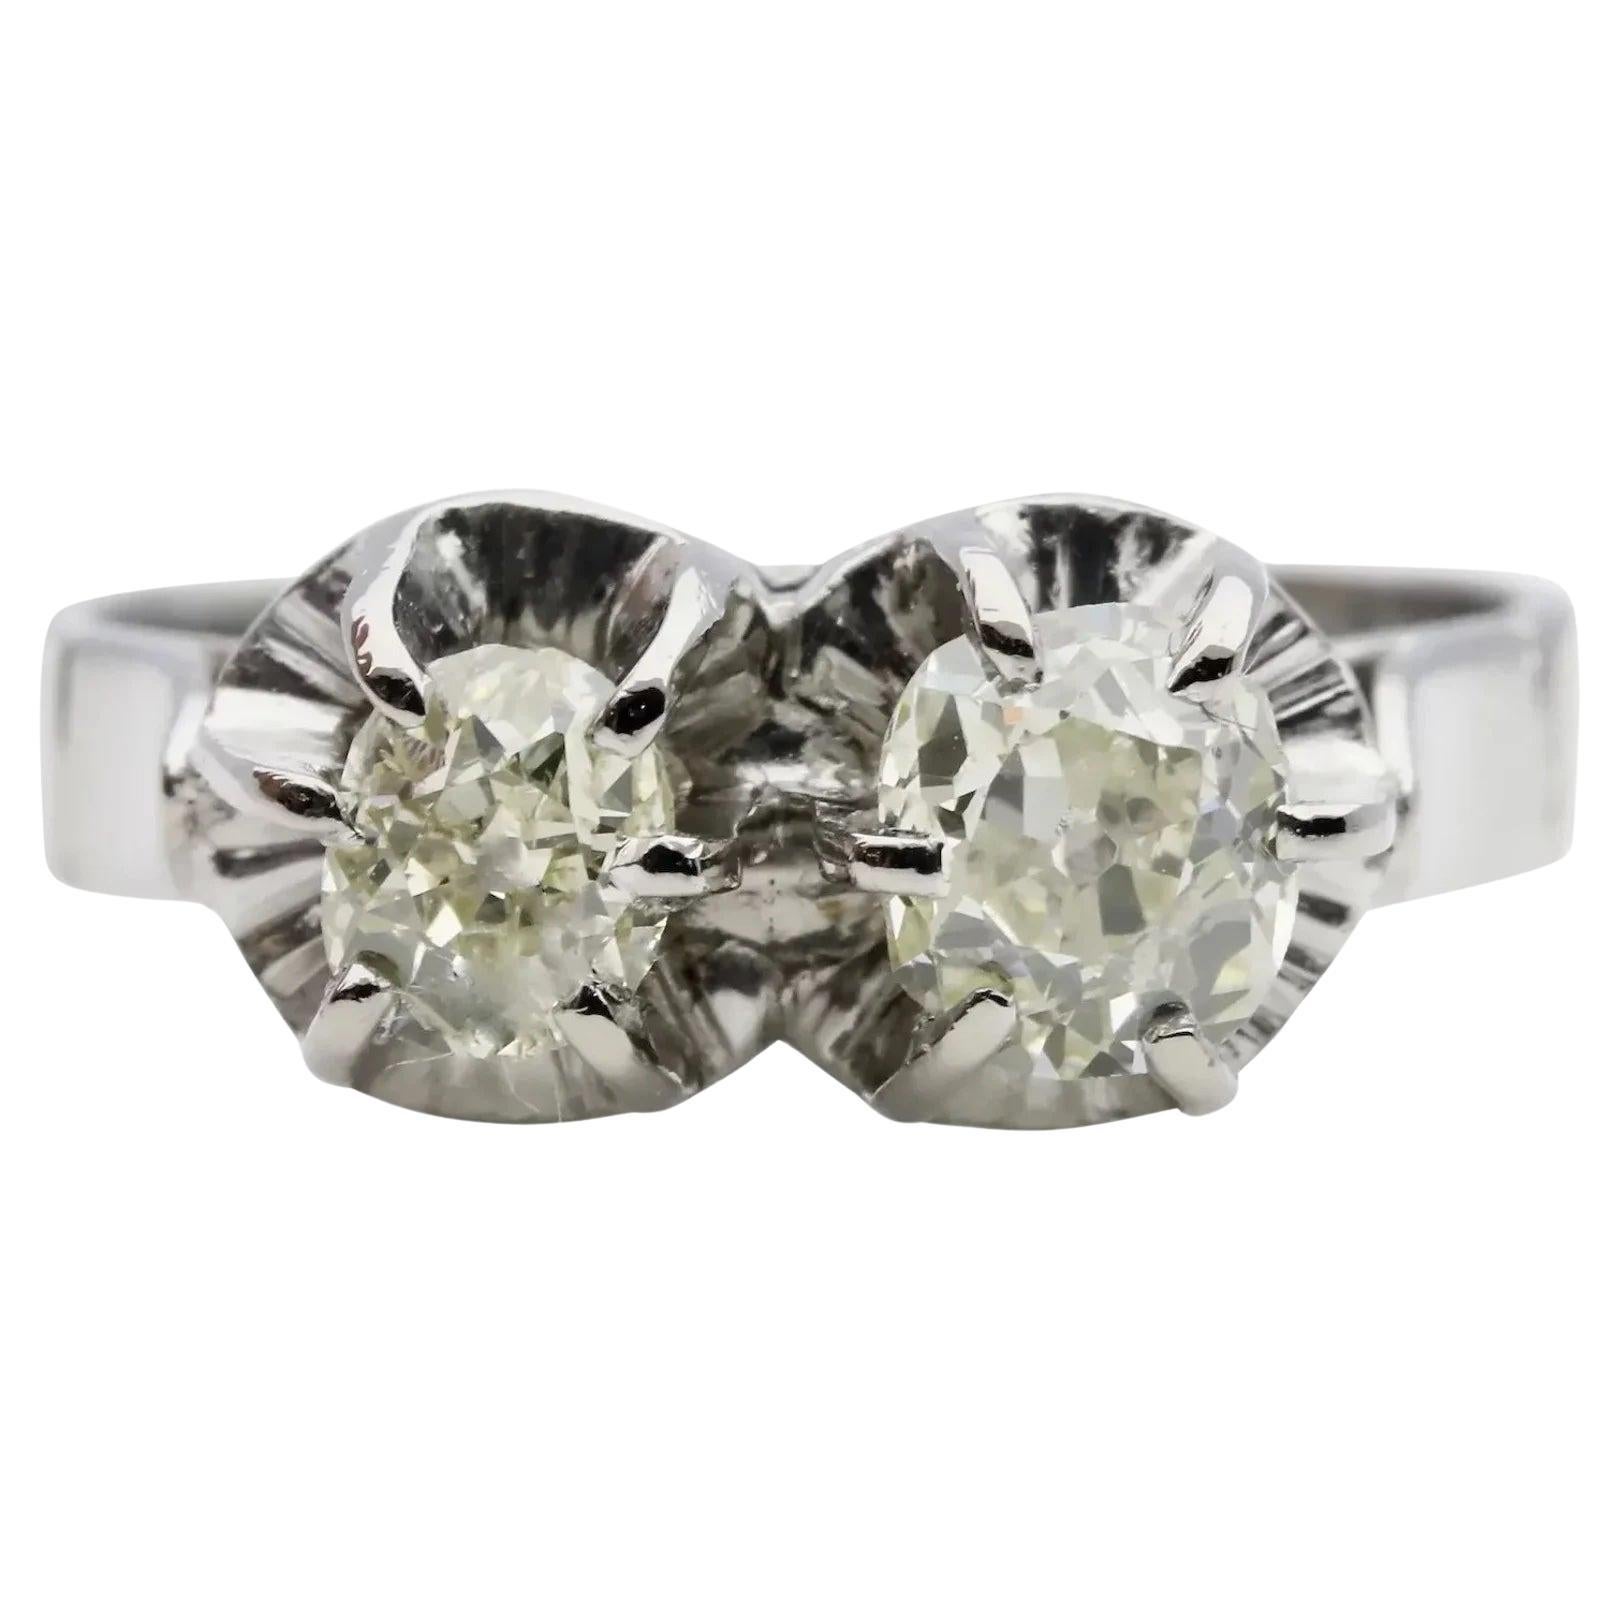  Art Deco Toi et Moi 0.97 Carat Old Mine Cut Diamond Ring in 18K White Gold For Sale